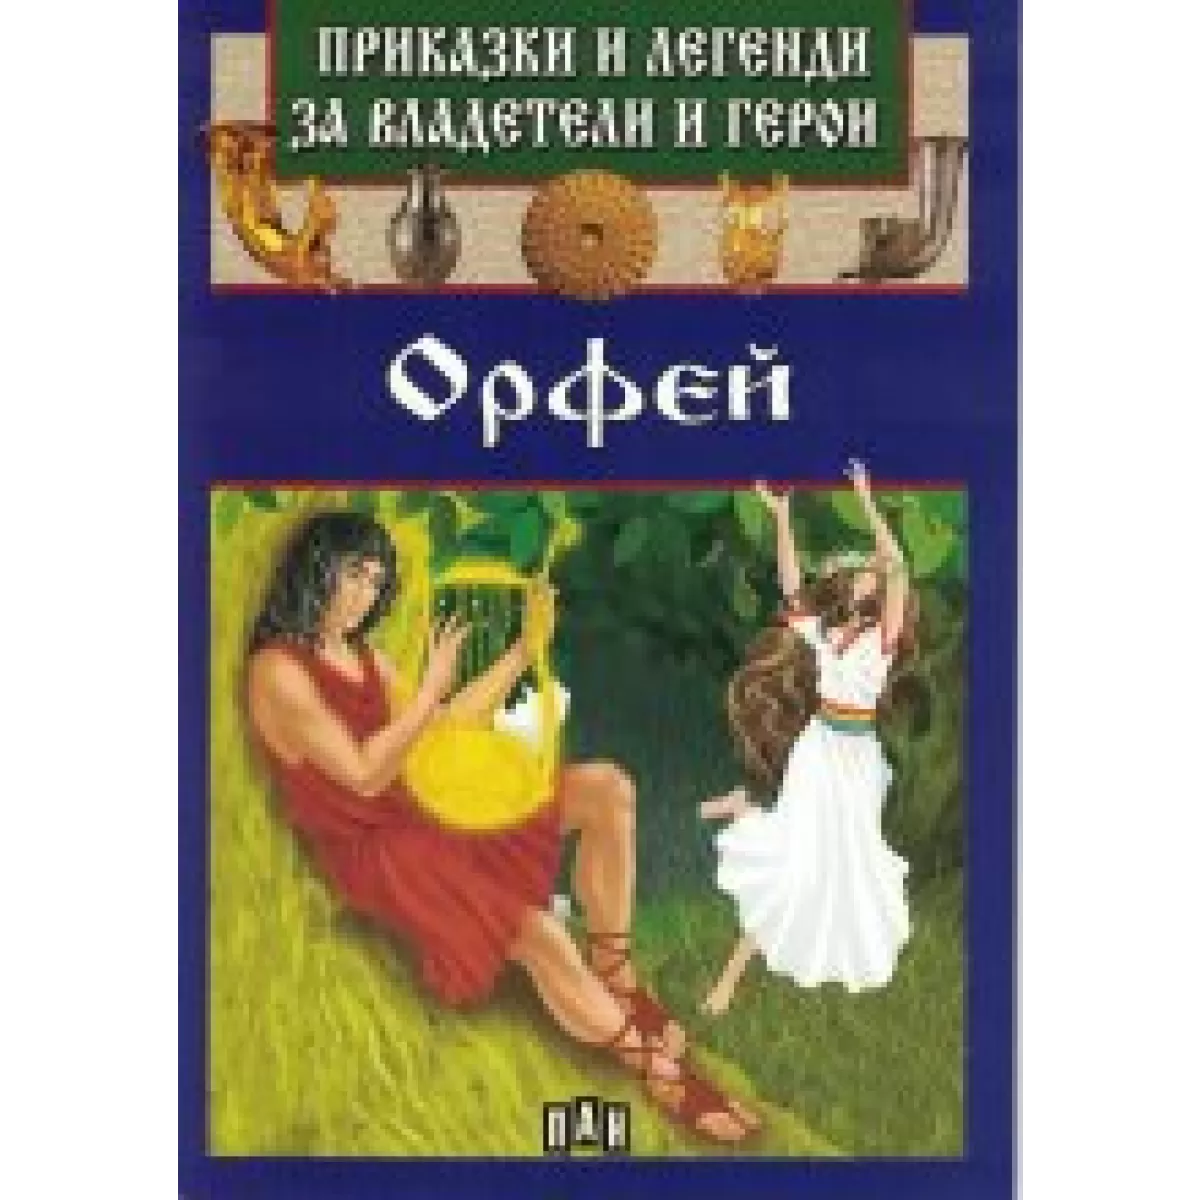 Приказки и легенди за владетели и герои - Орфей